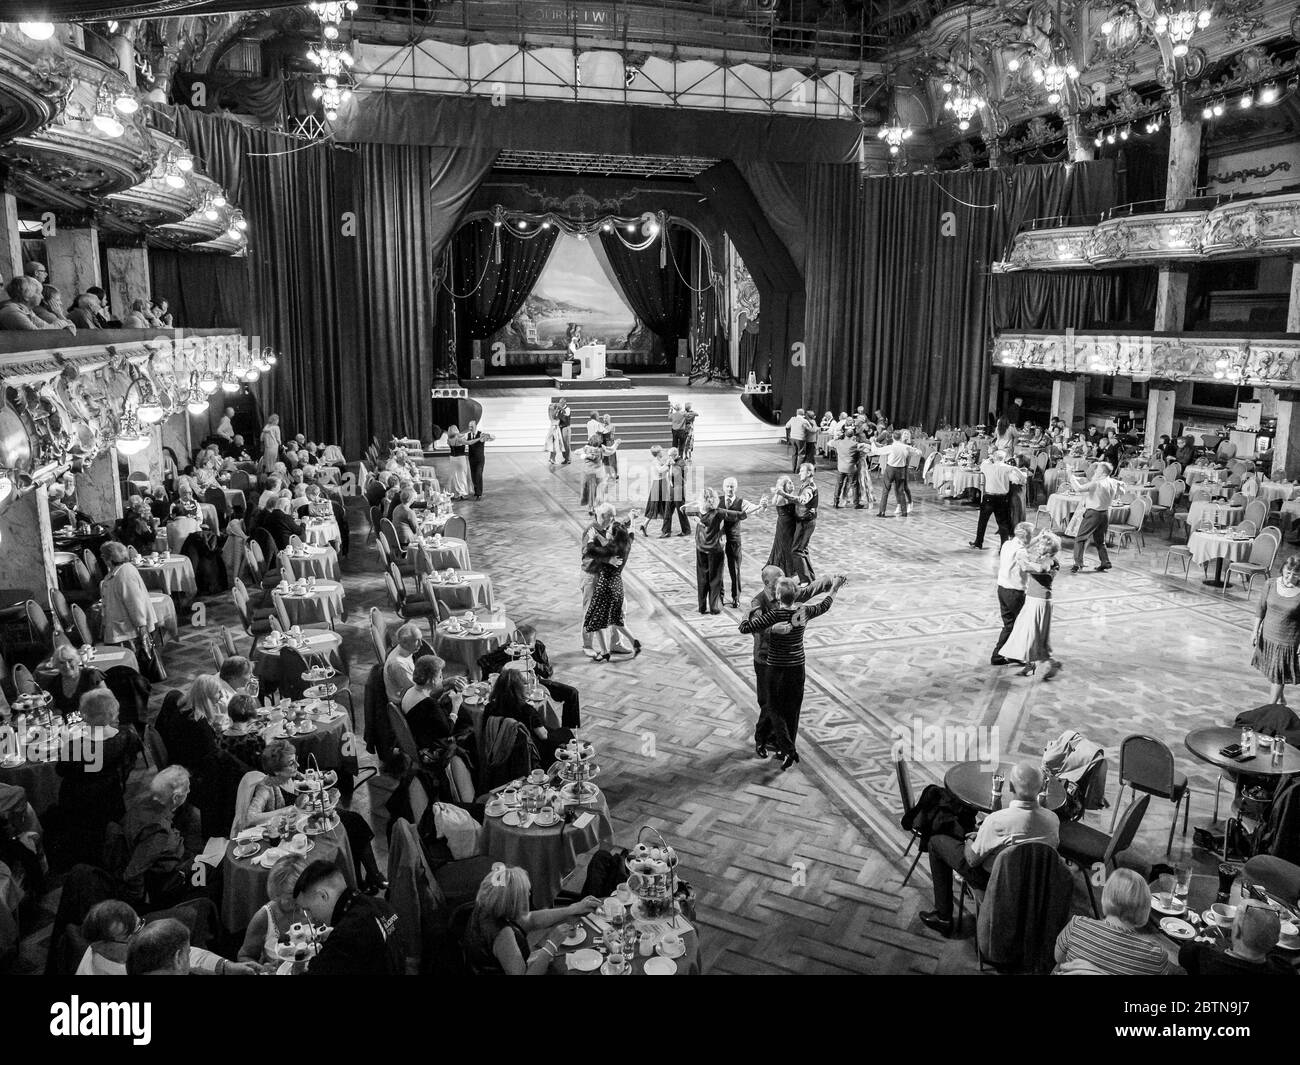 Inside Blackpool Tower Ballroom, Blackpool Promenade, Lancashire, England, People Dancing Stock Photo